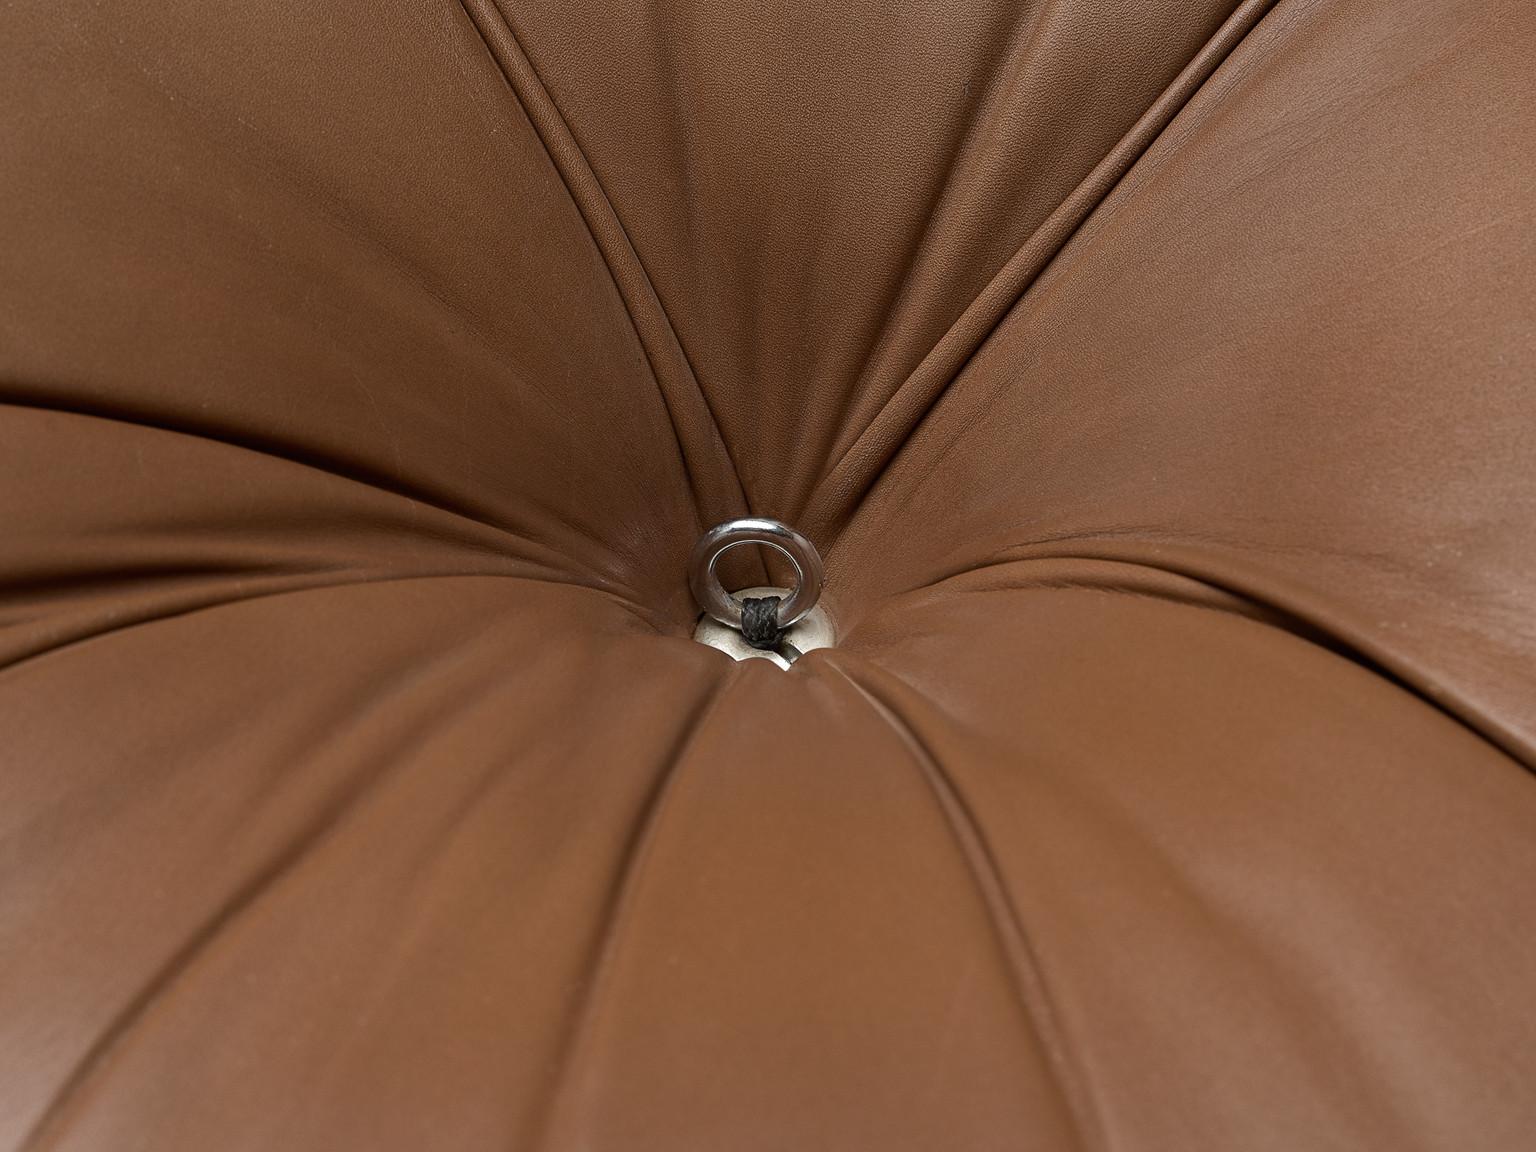 Mario Bellini 'Camaleonda' Modular Sofa in Original Brown Leather 2